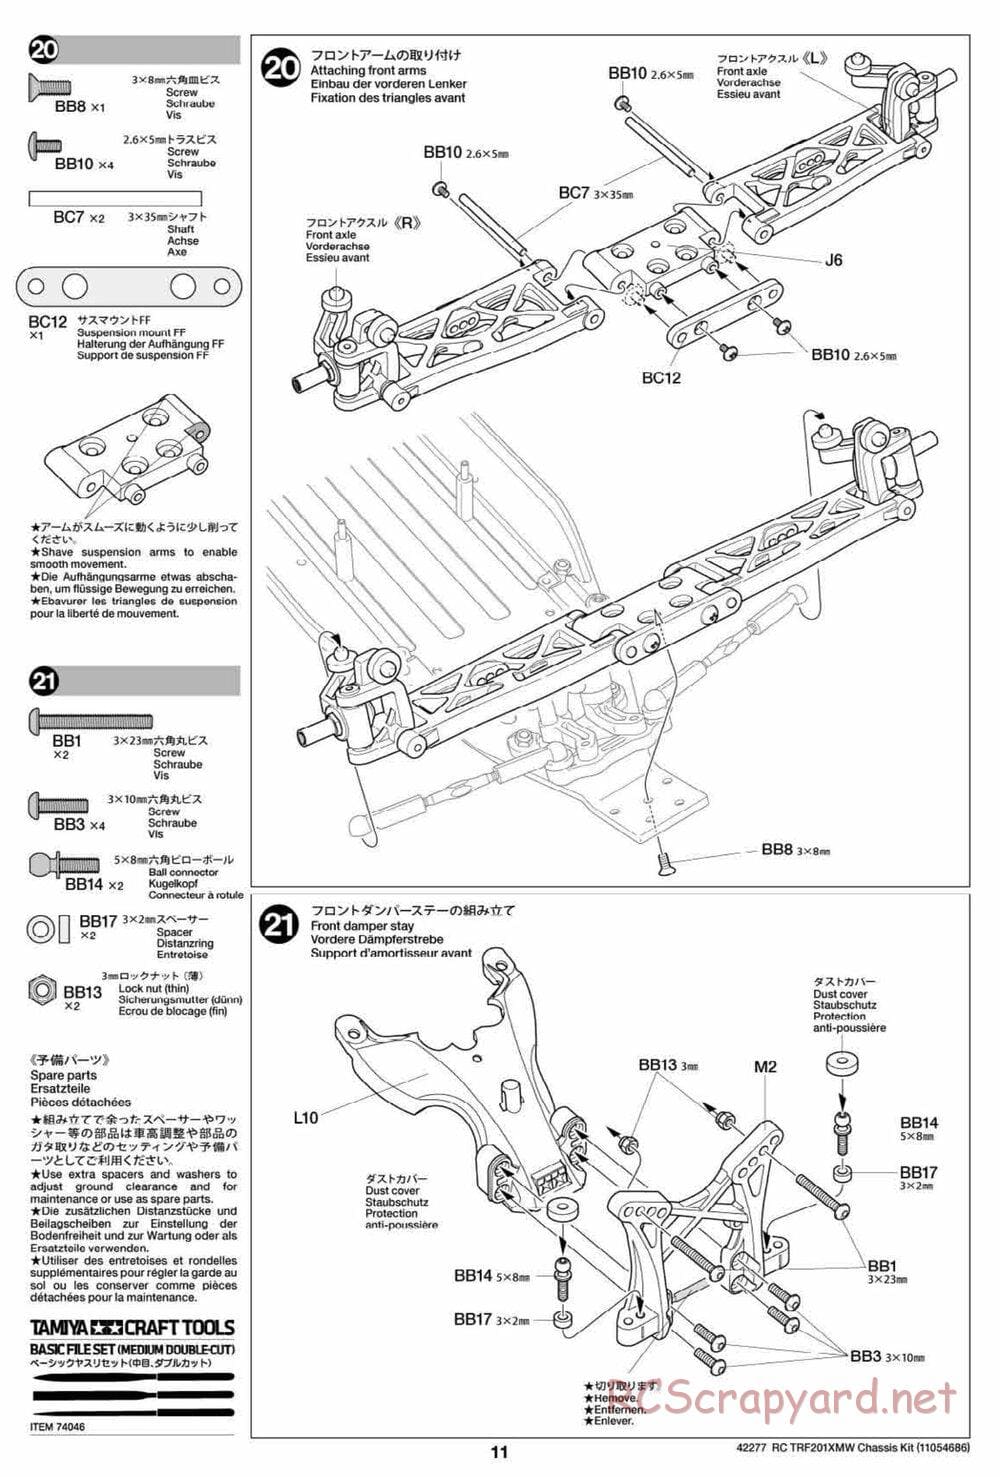 Tamiya - TRF201XMW Chassis - Manual - Page 11